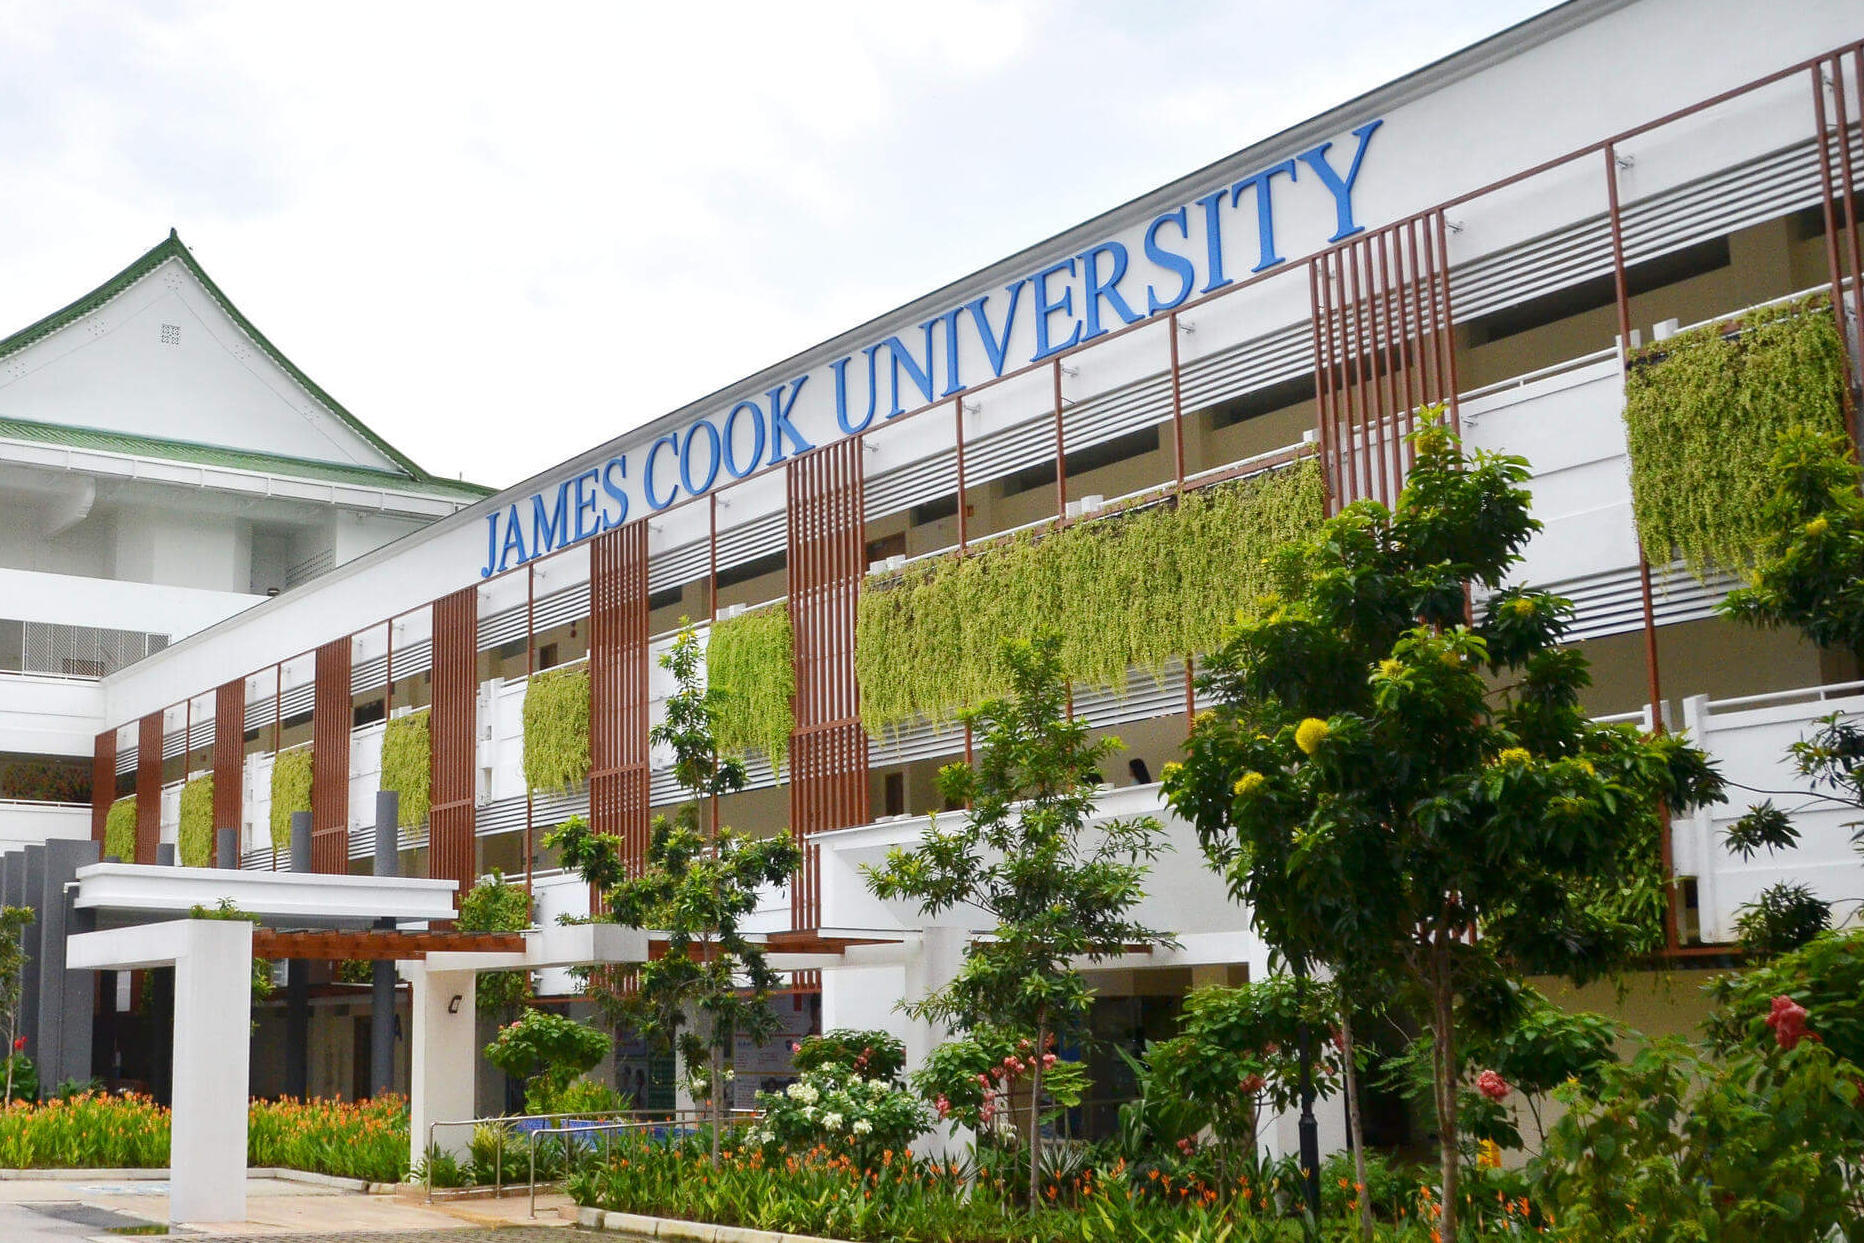 Studiere an der James Cook University in Singapur